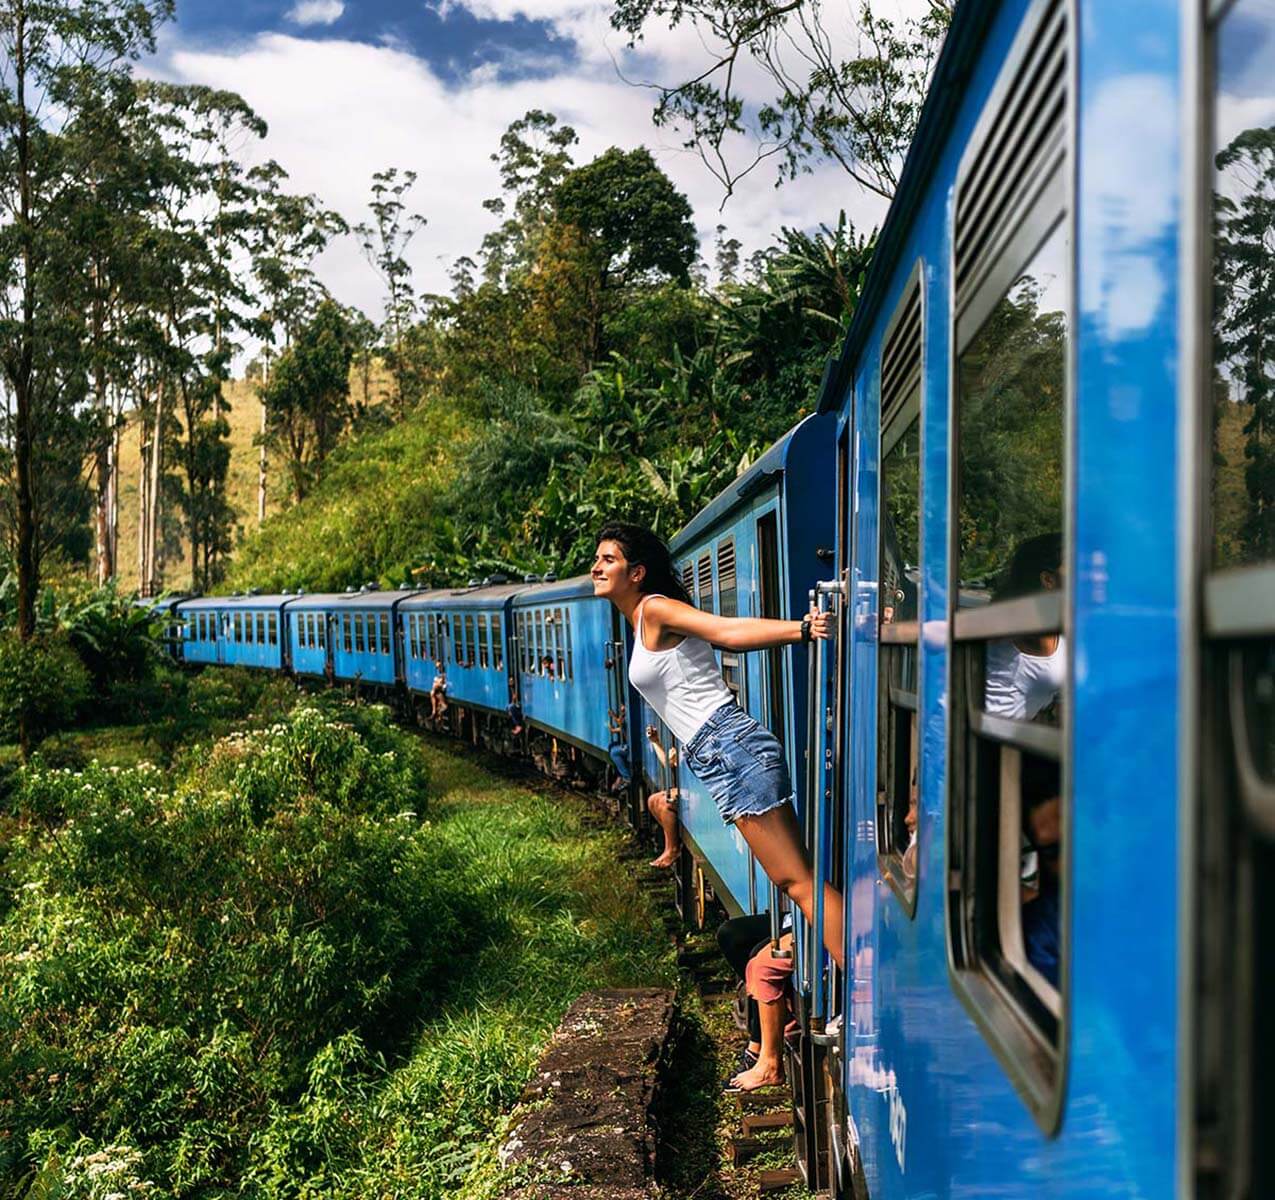 Train Ride in Sri Lanka